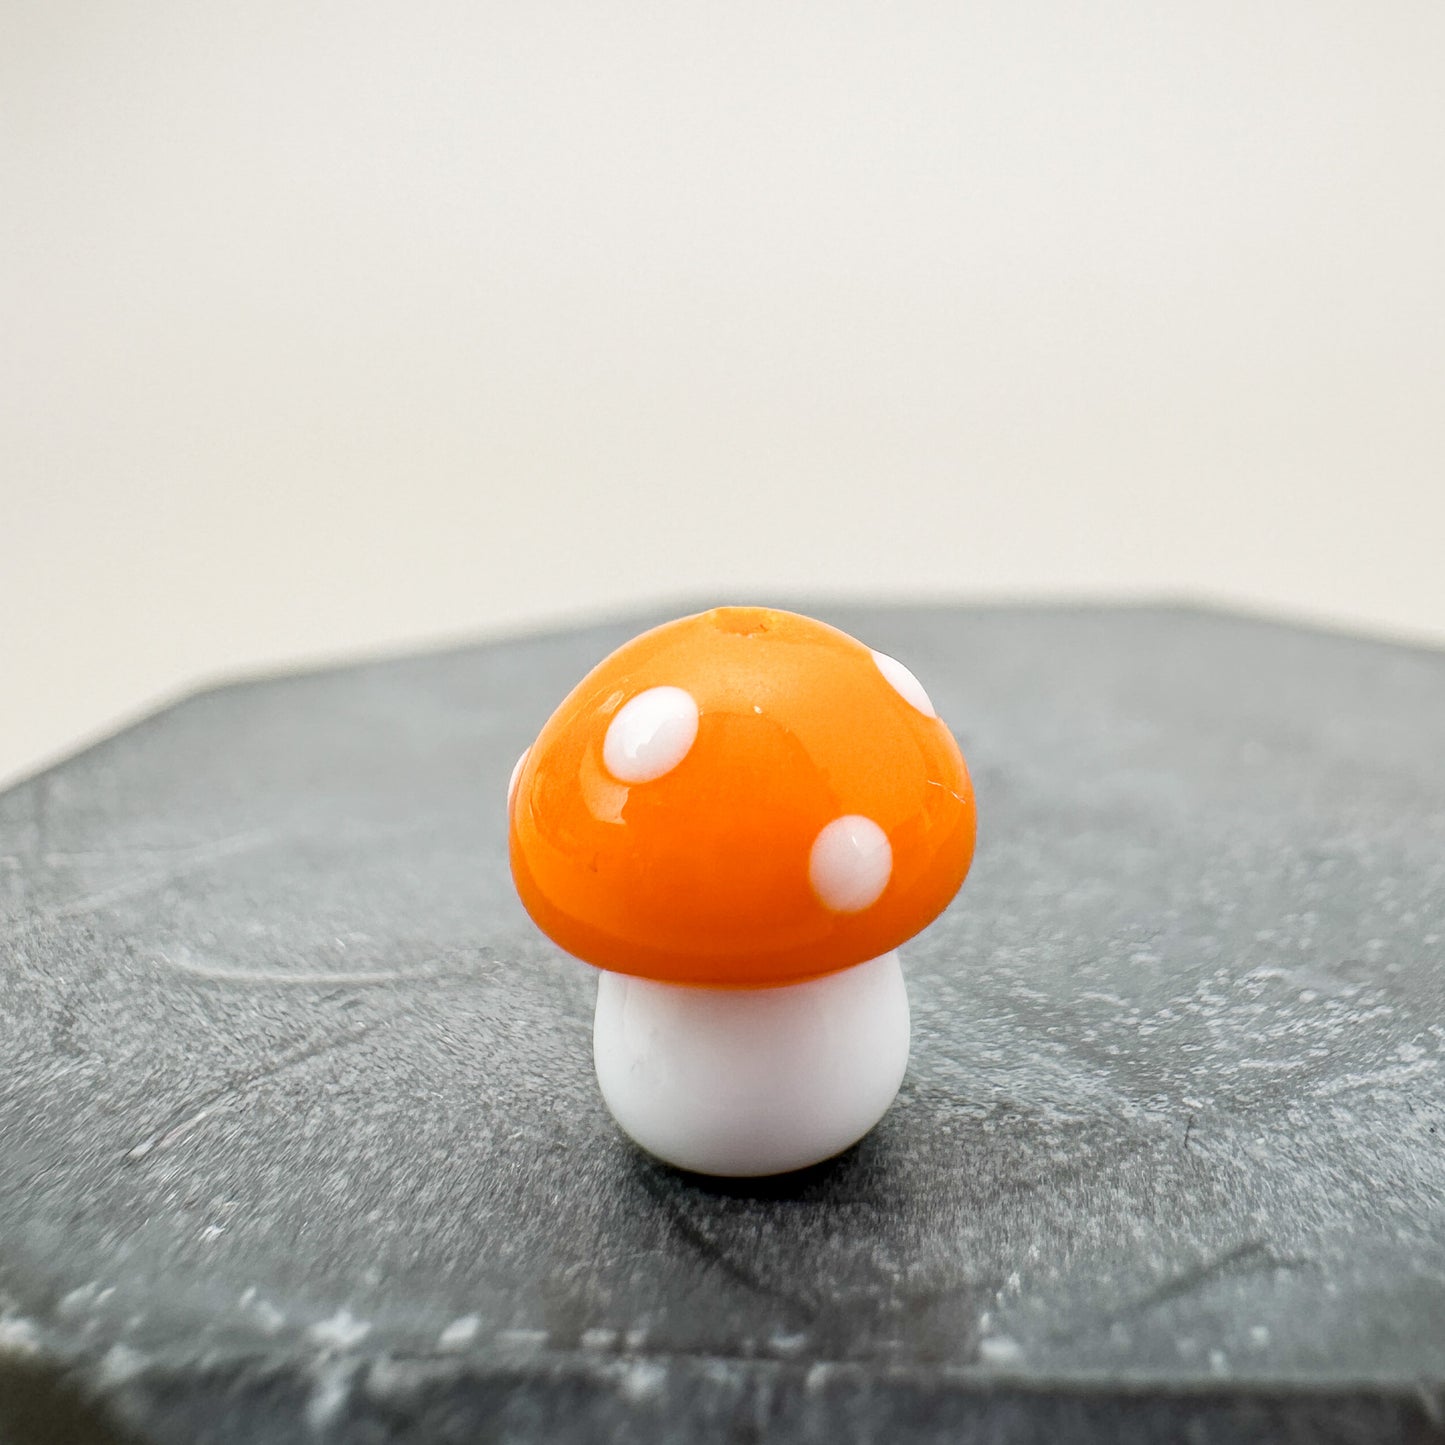 Chibi Handmade Glass Beads - Polka Dot Mushroom (5 Color Options) - 1 pc.